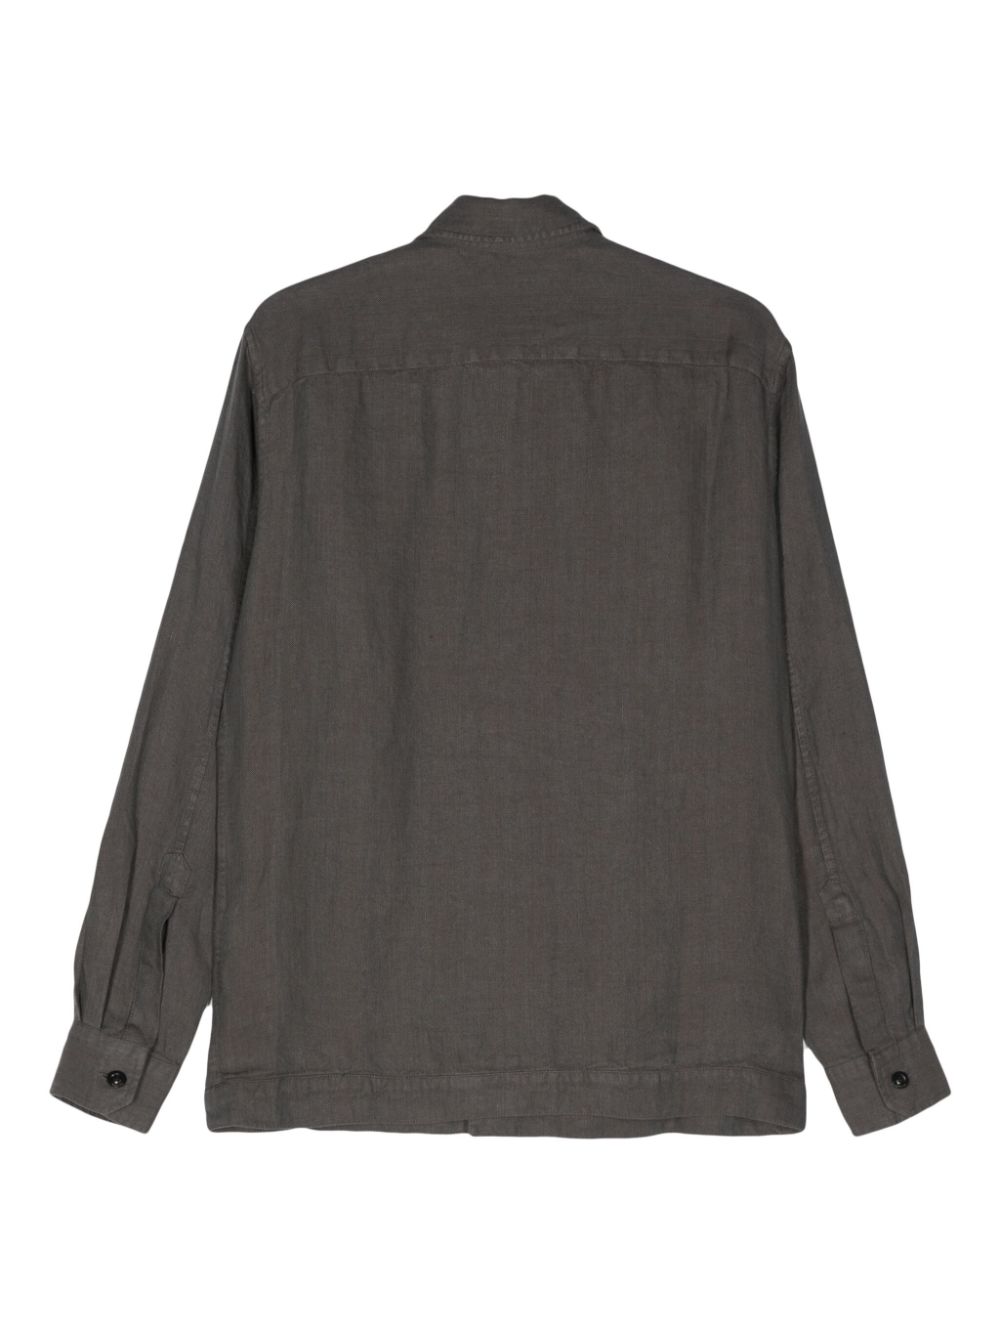 Boglioli tonal stitching linen shirt jacket - Grijs